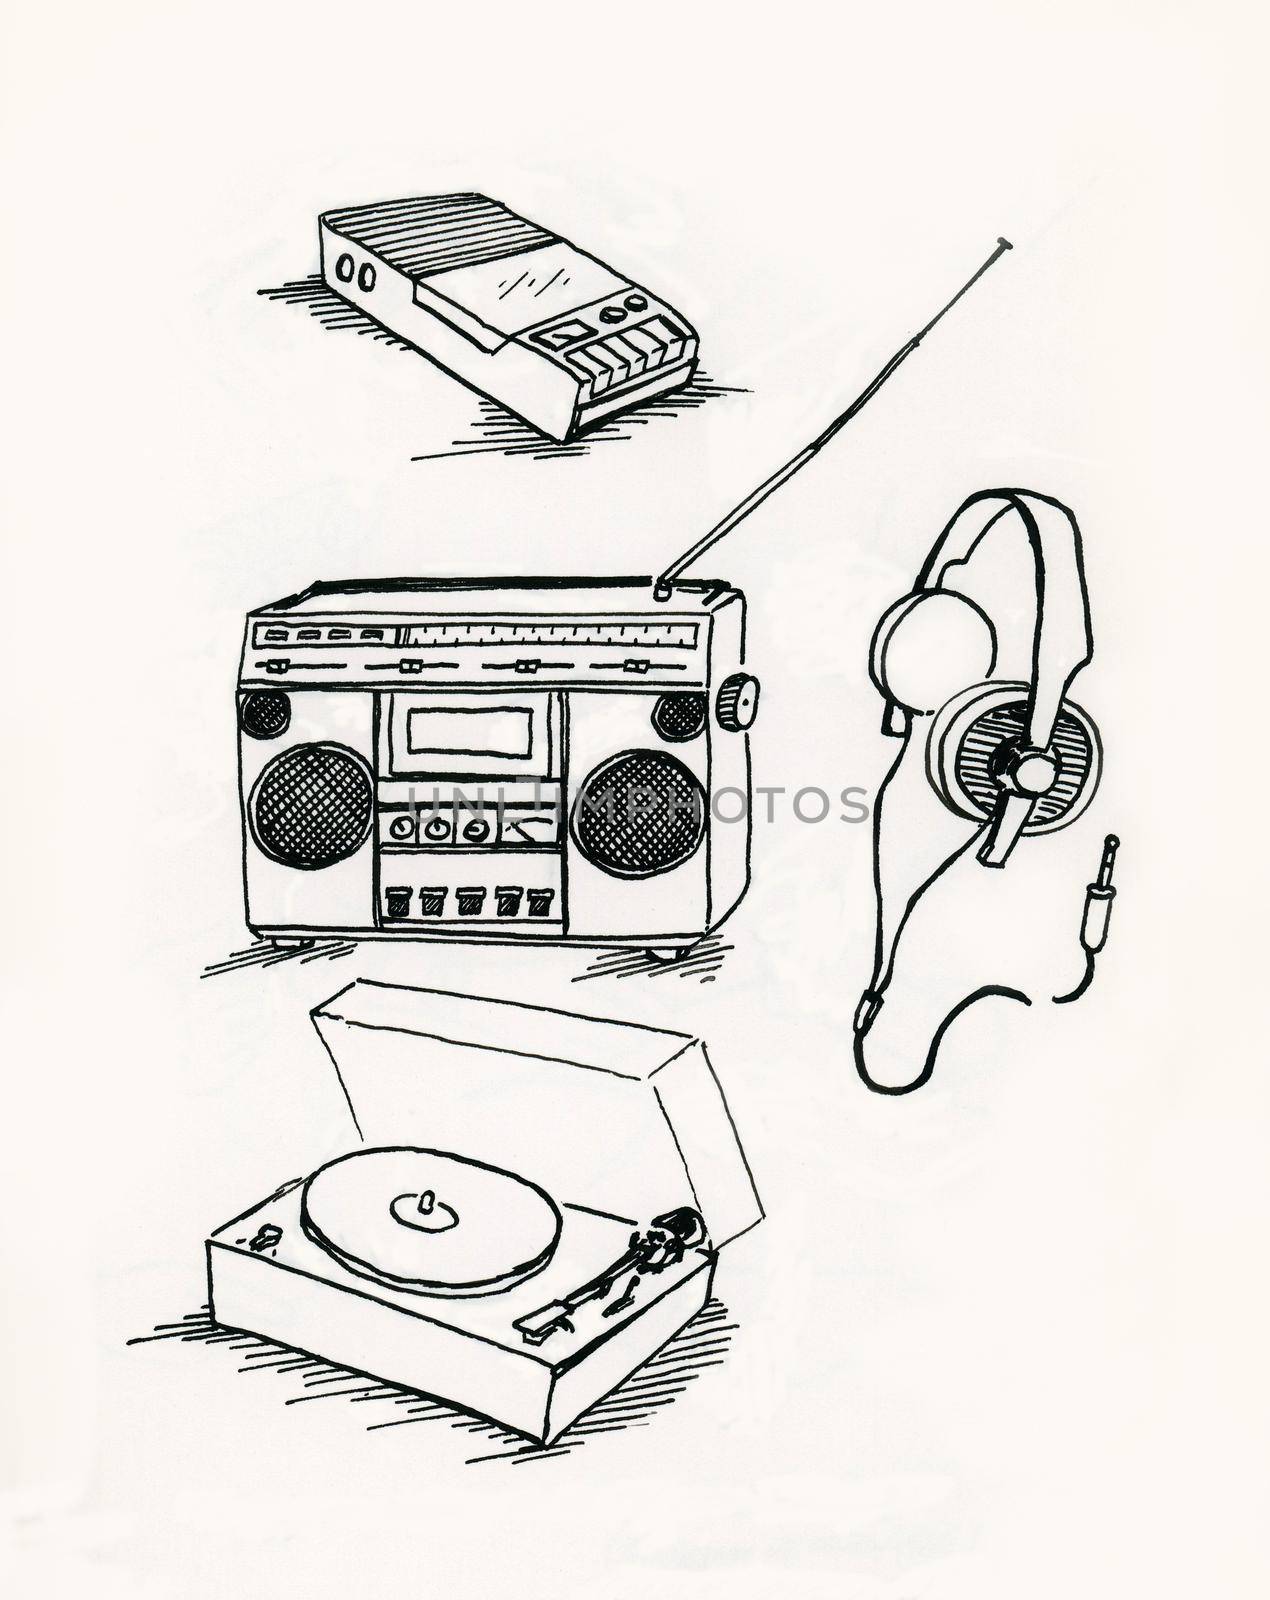 Retro audio equipment by WielandTeixeira